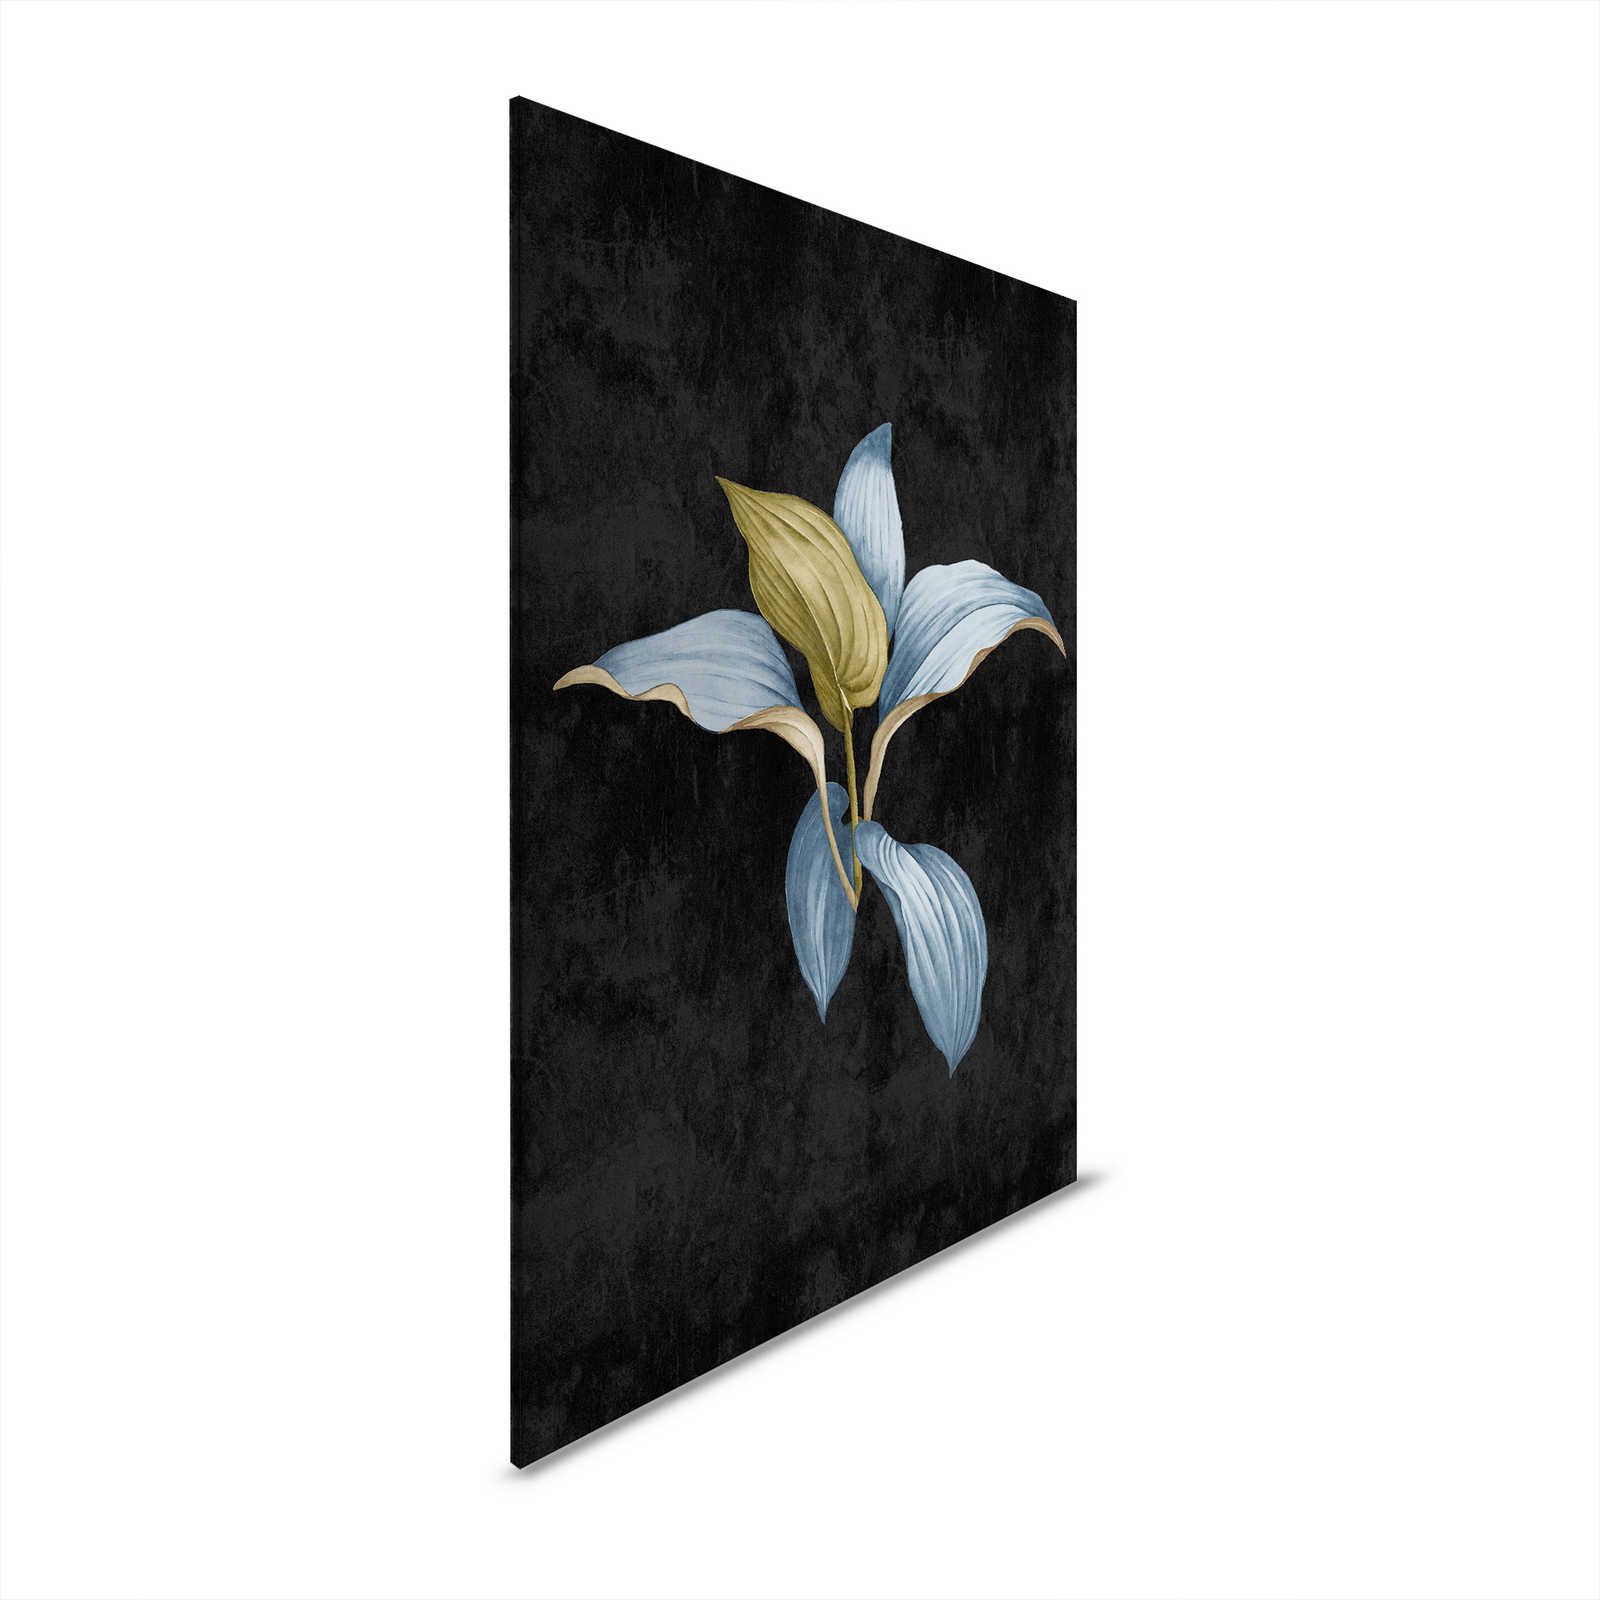 Fiji 3 - Dark Canvas Painting Botanical Design in Blue & Green - 0.60 m x 0.90 m
